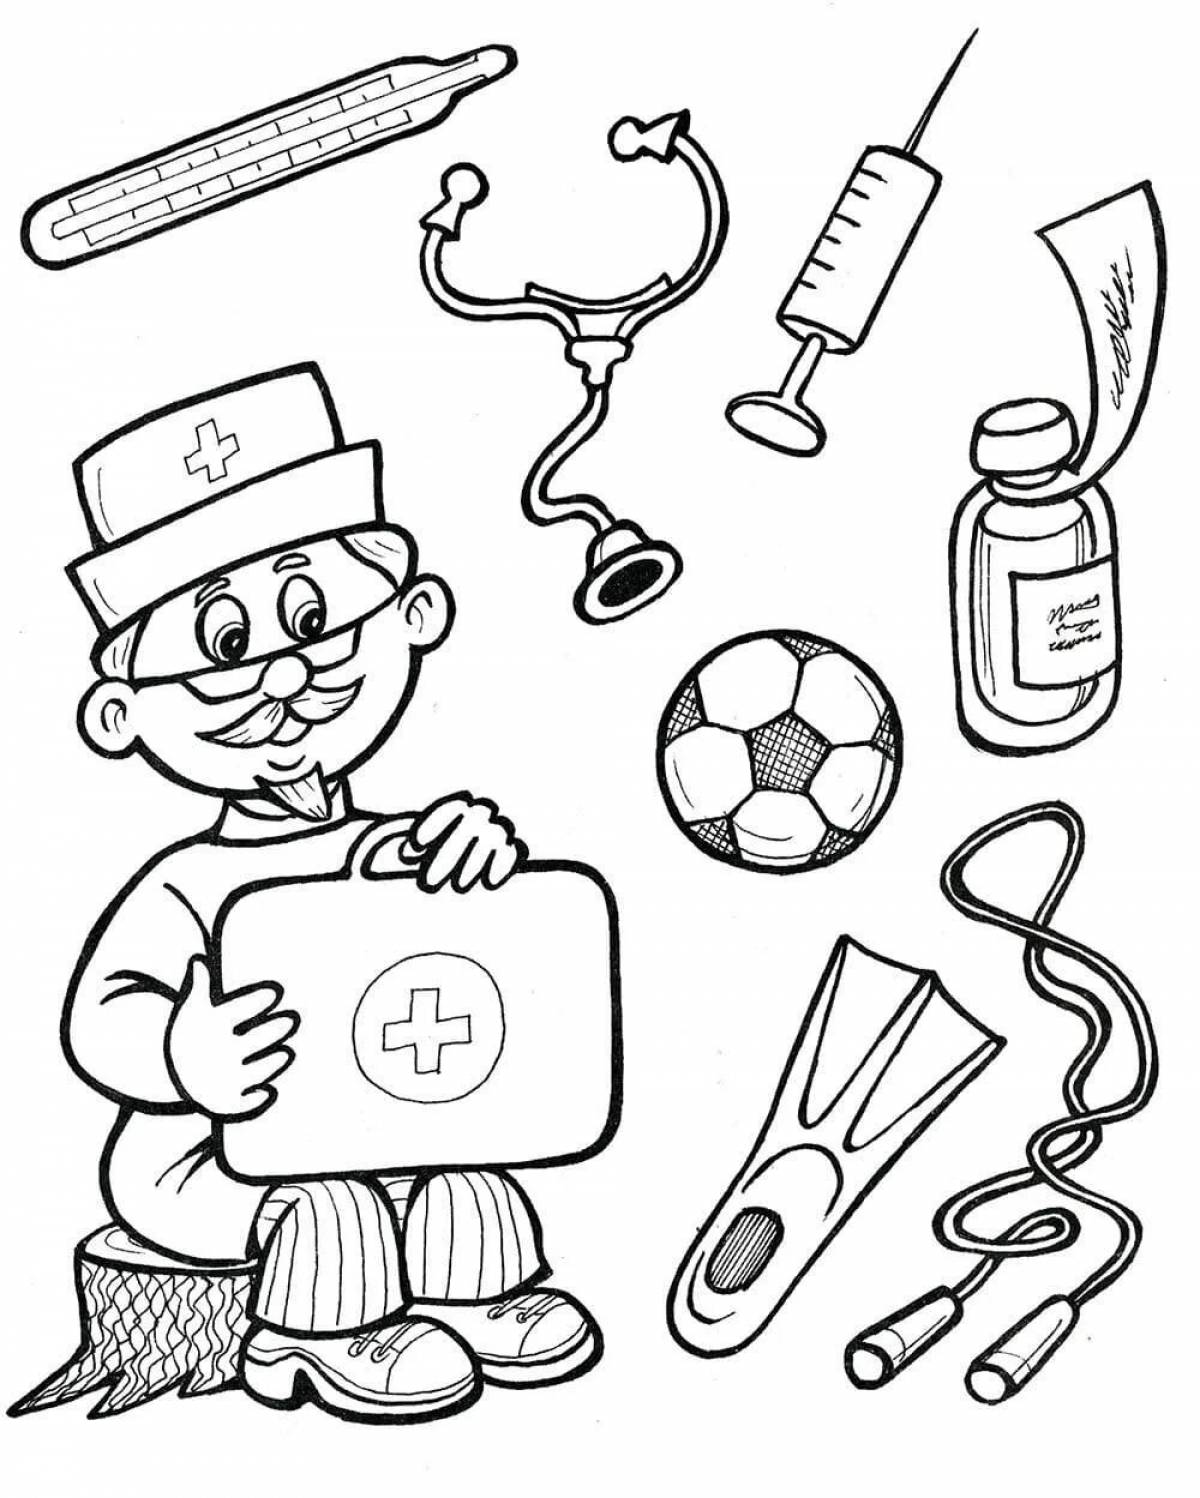 Coloring page of preschool tools